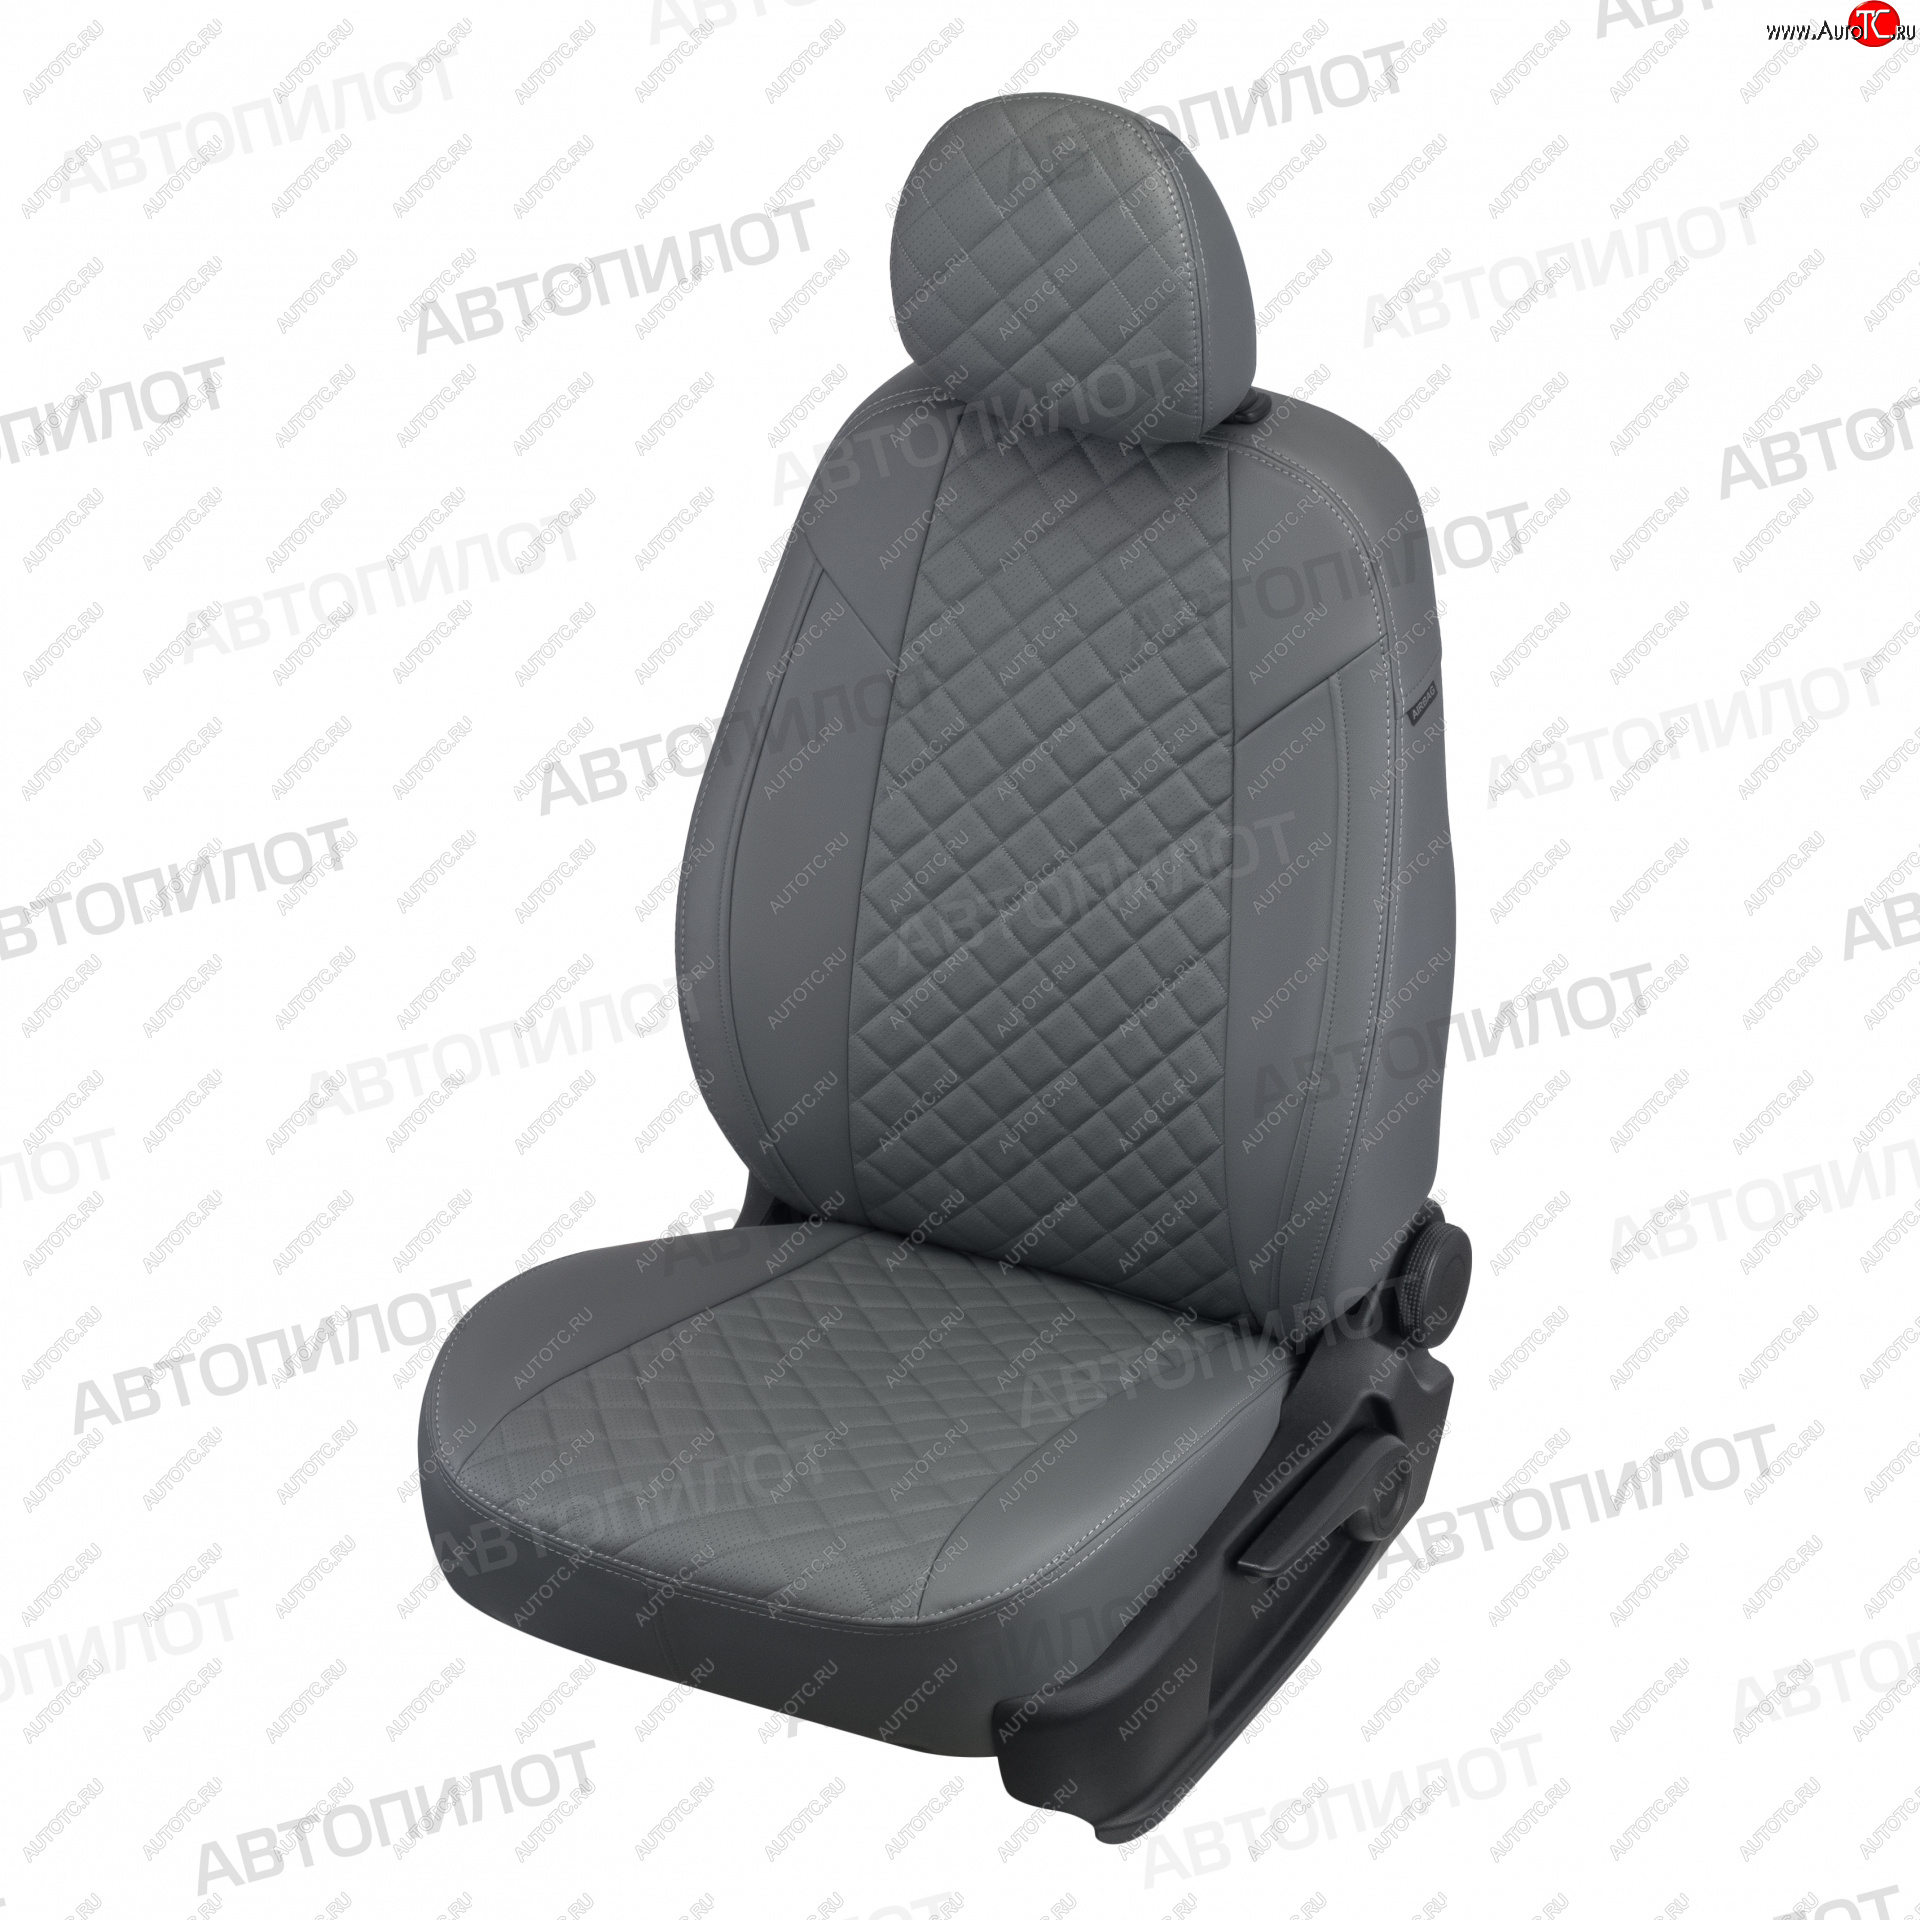 13 999 р. Чехлы сидений (экокожа) Автопилот Ромб  KIA Soul  1 AM (2008-2014) (серый)